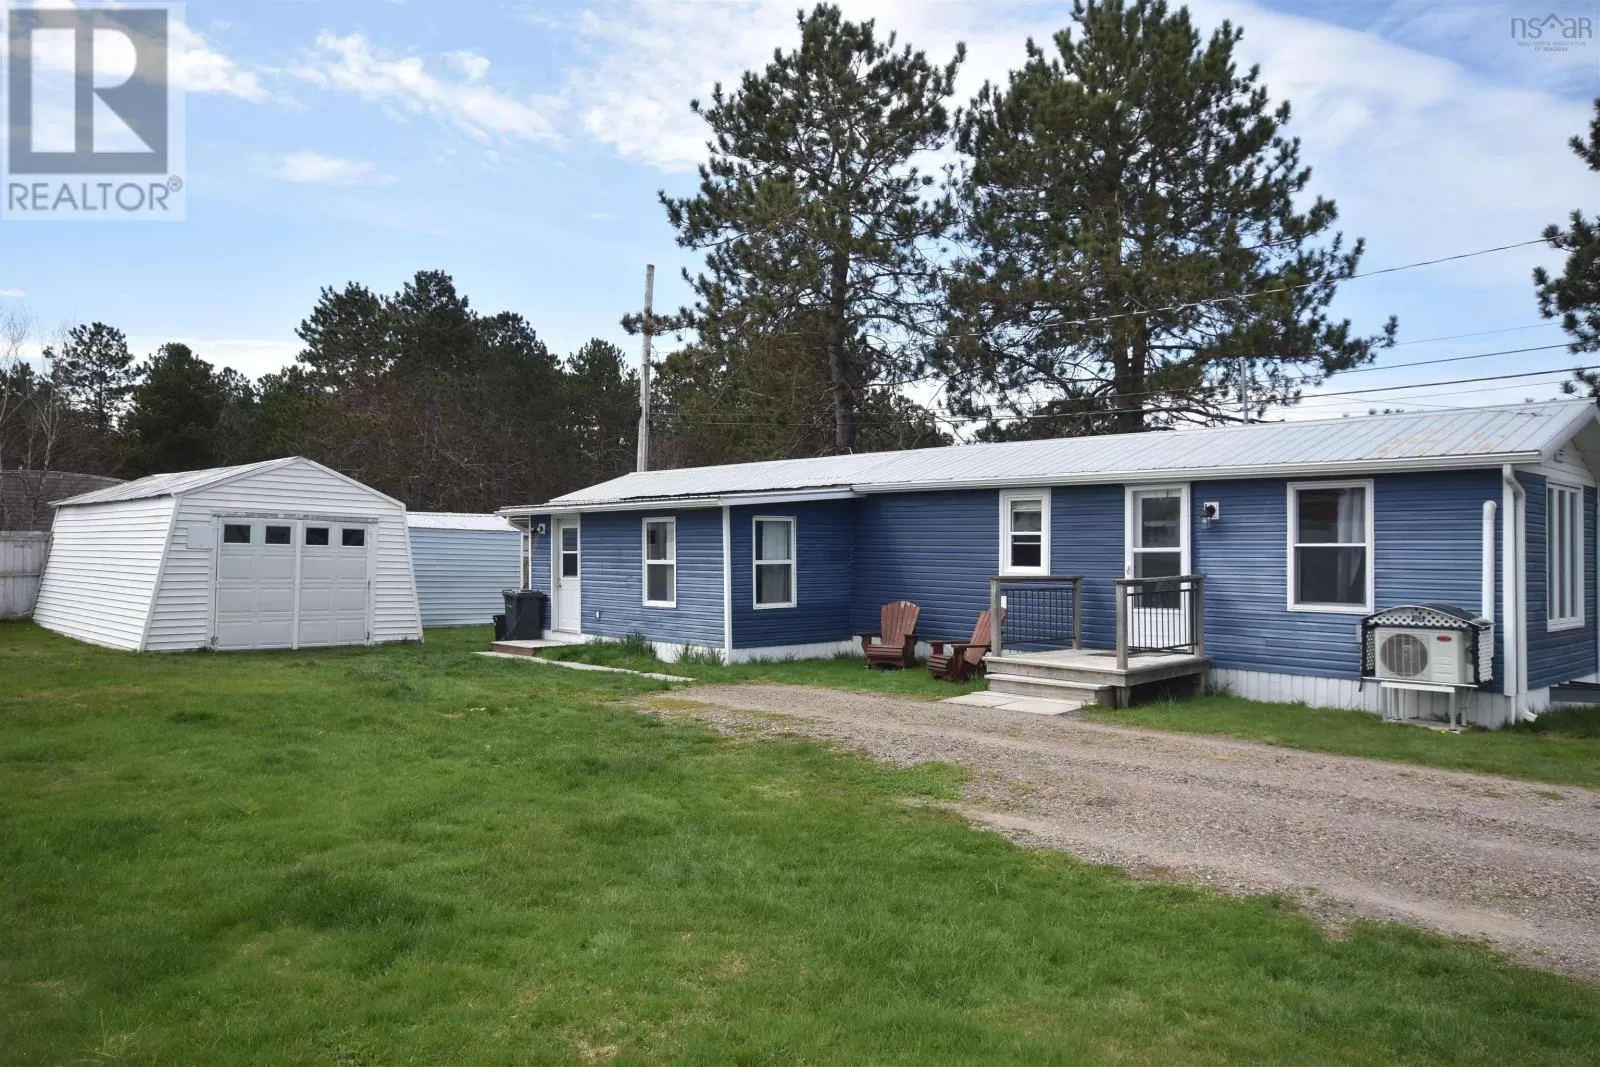 Mobile Home for rent: 31 Richardson Drive, Meadowvale, Nova Scotia B0P 1R0